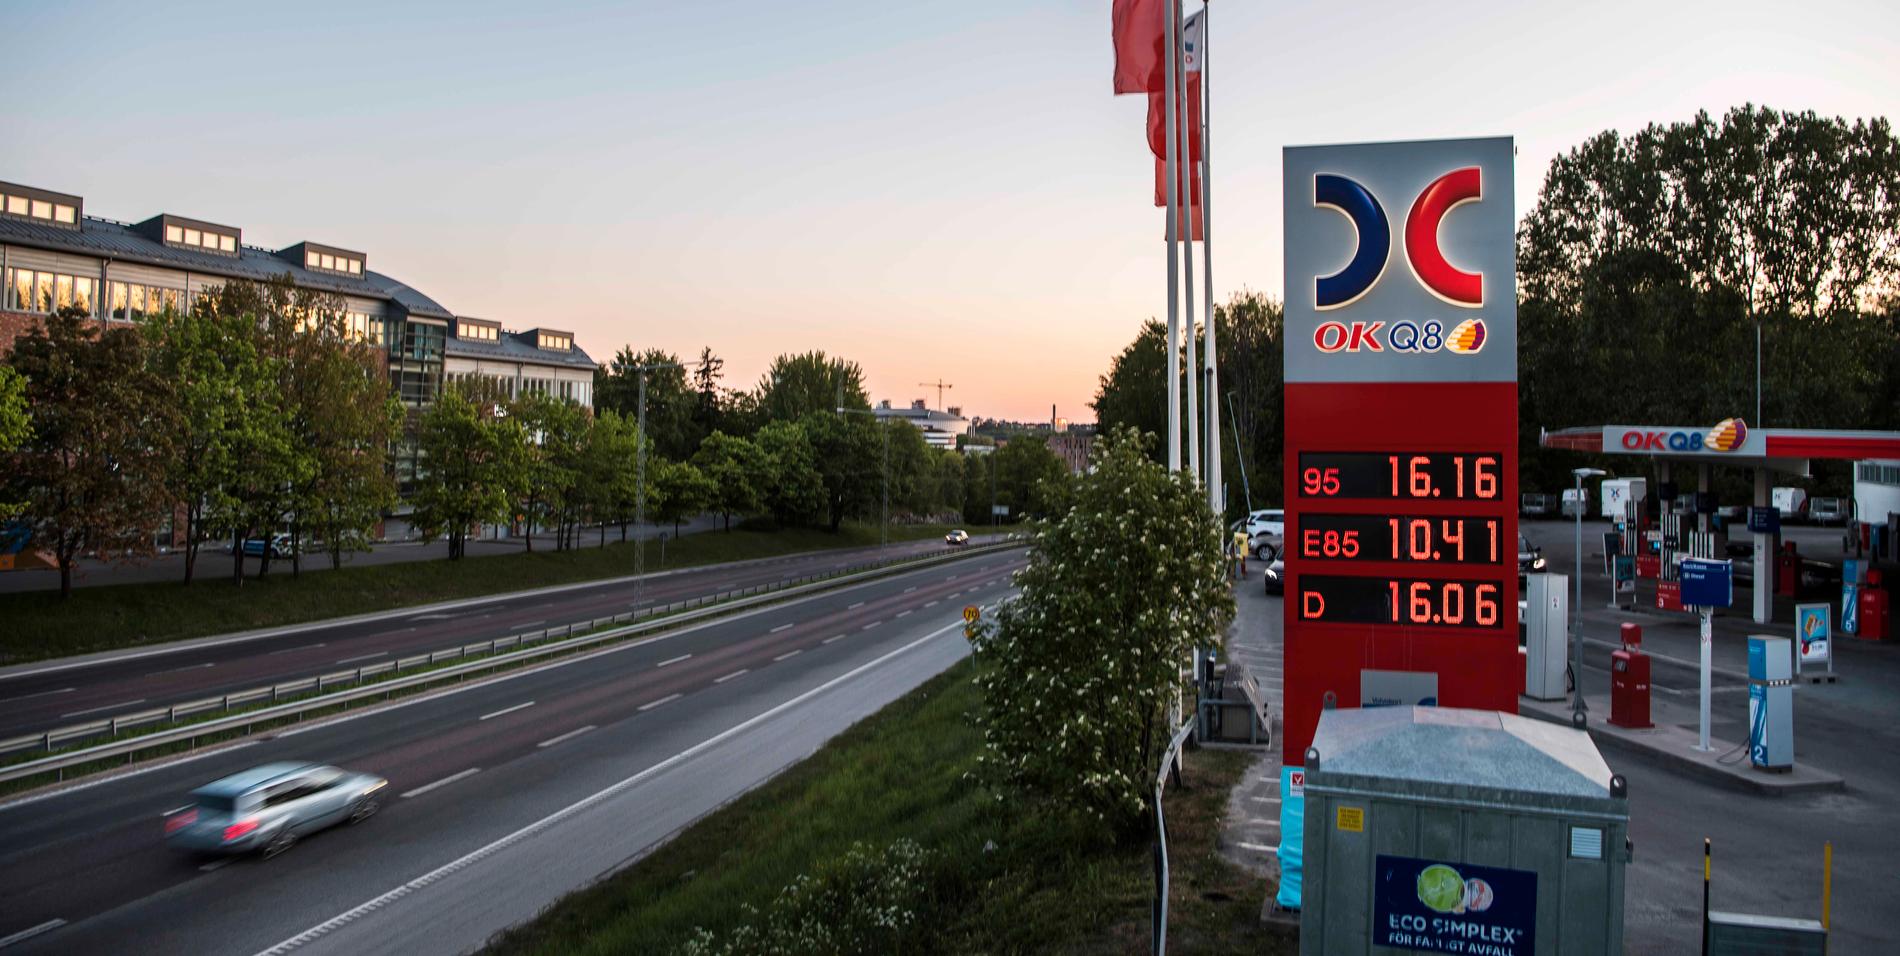 Sedan bilden togs har bensinpriset stigit till 16.79